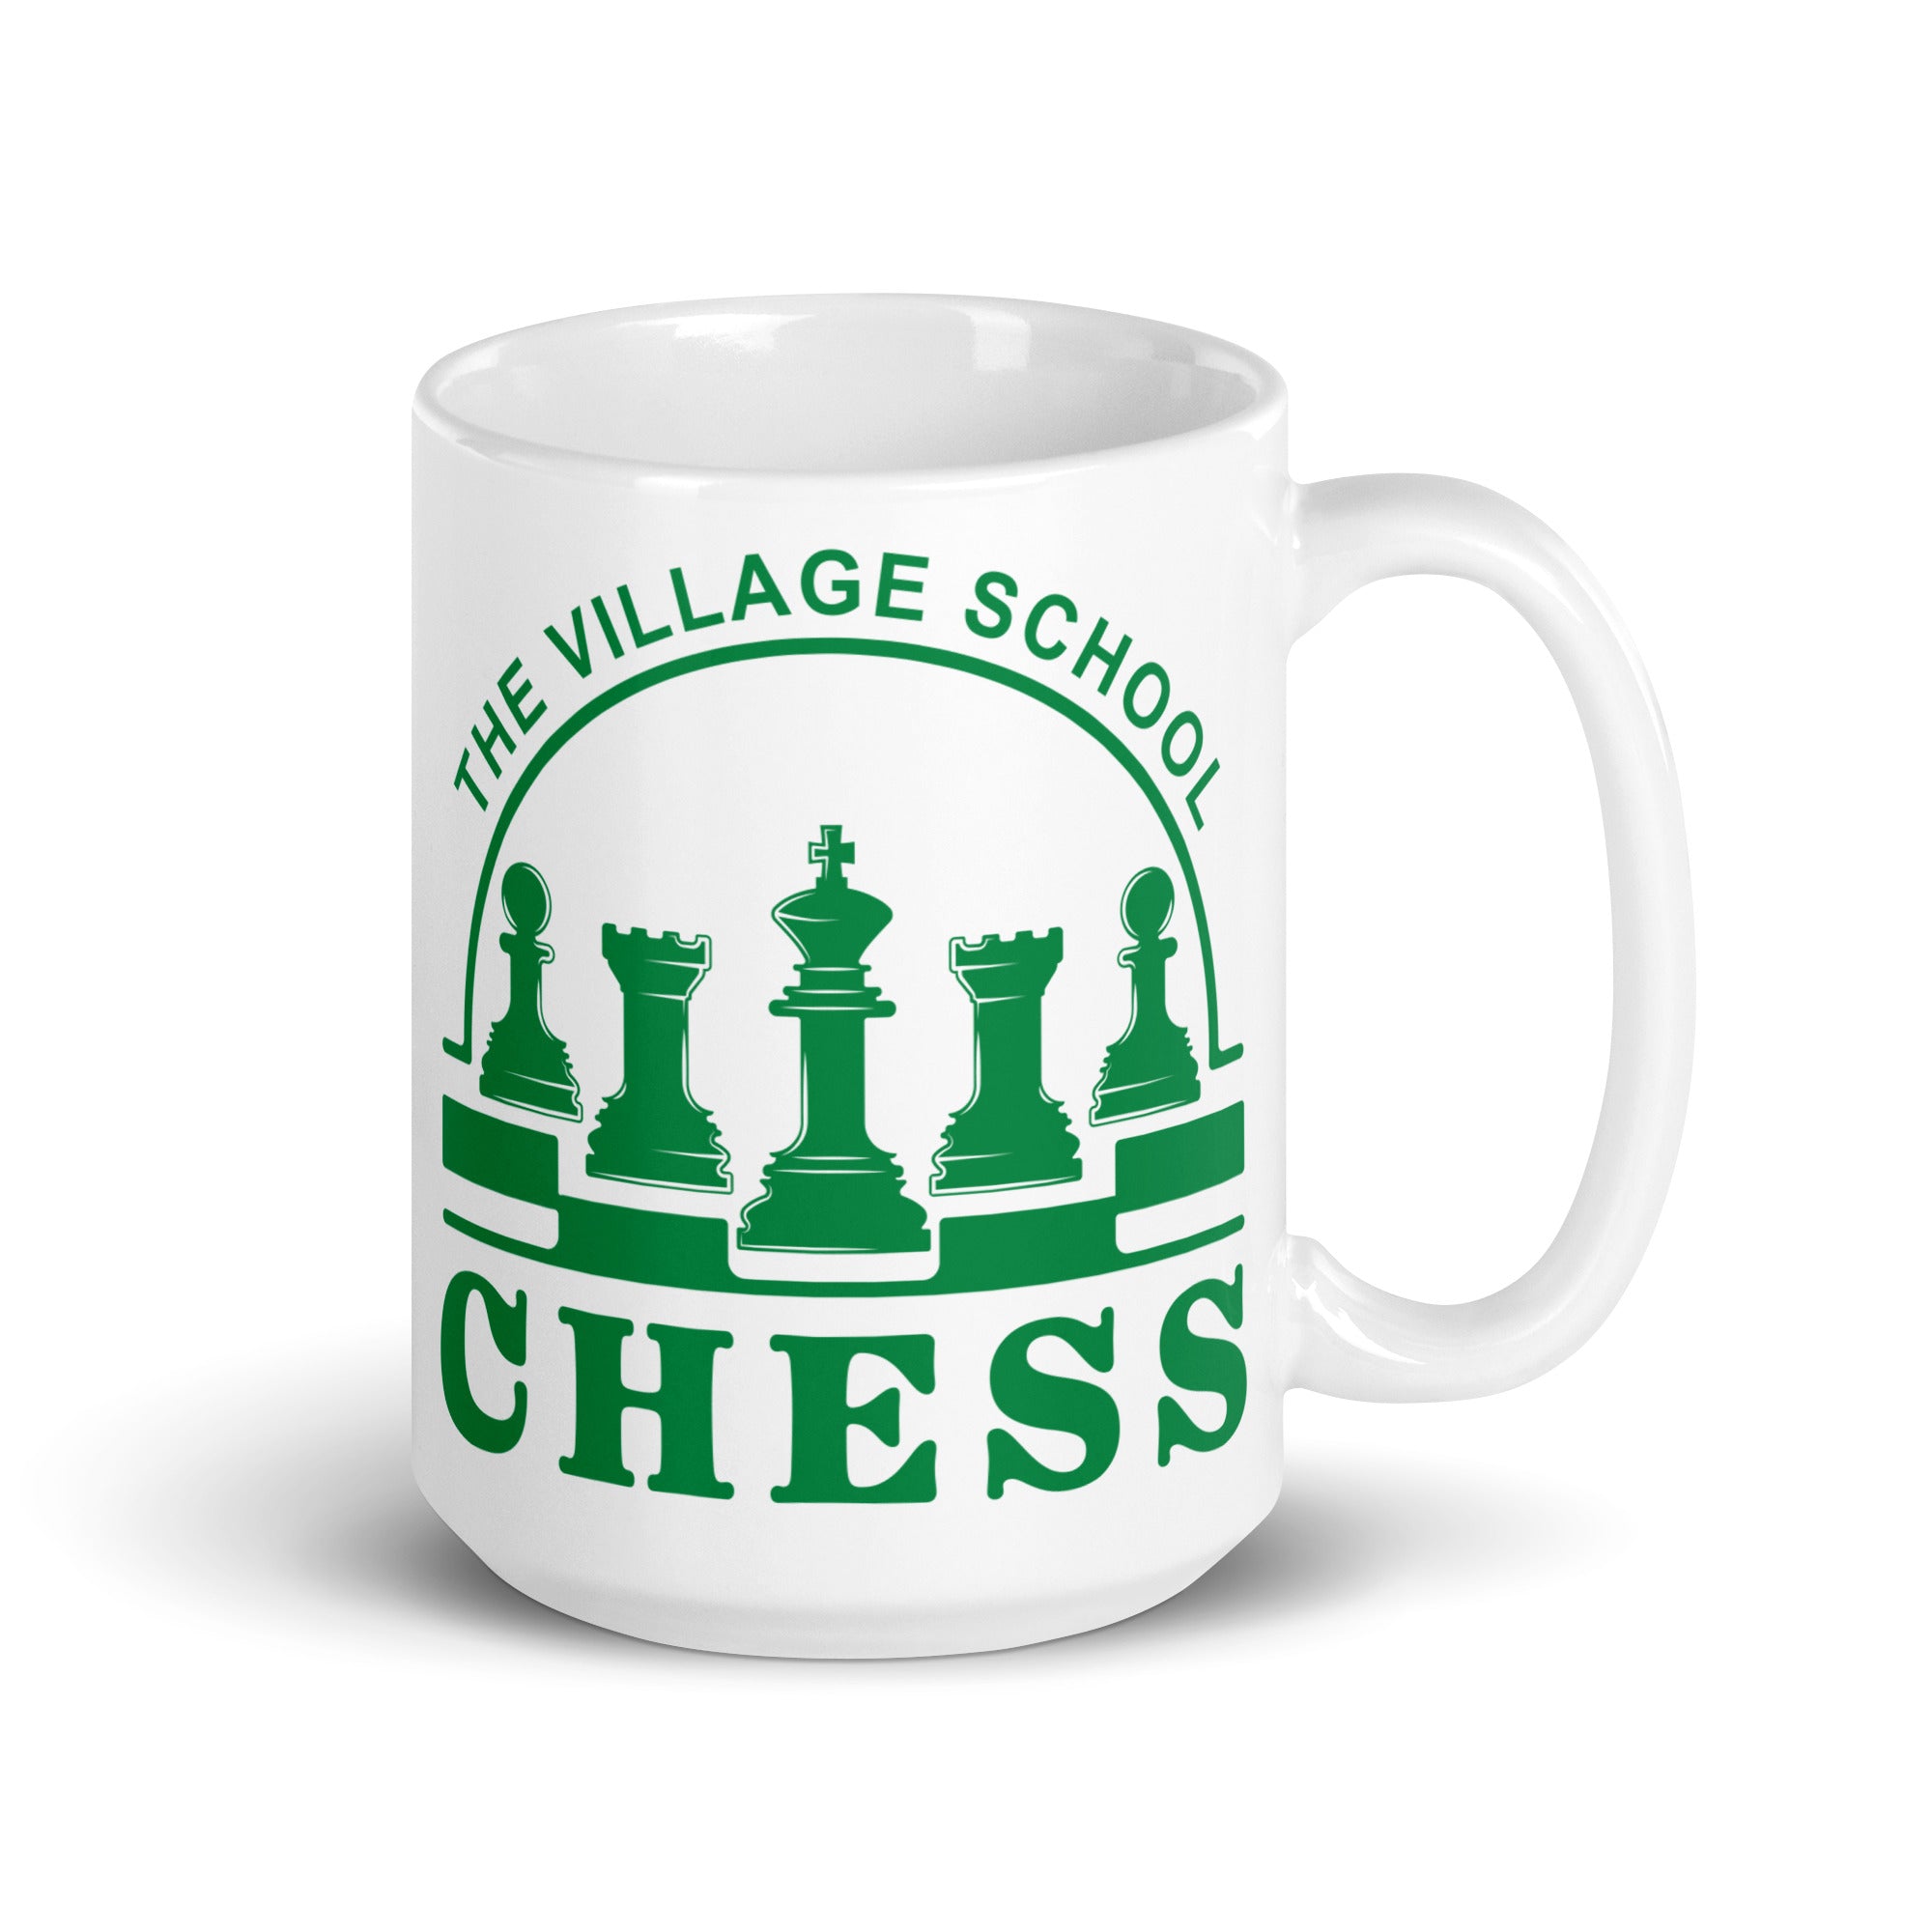 The Village School Chess White glossy mug